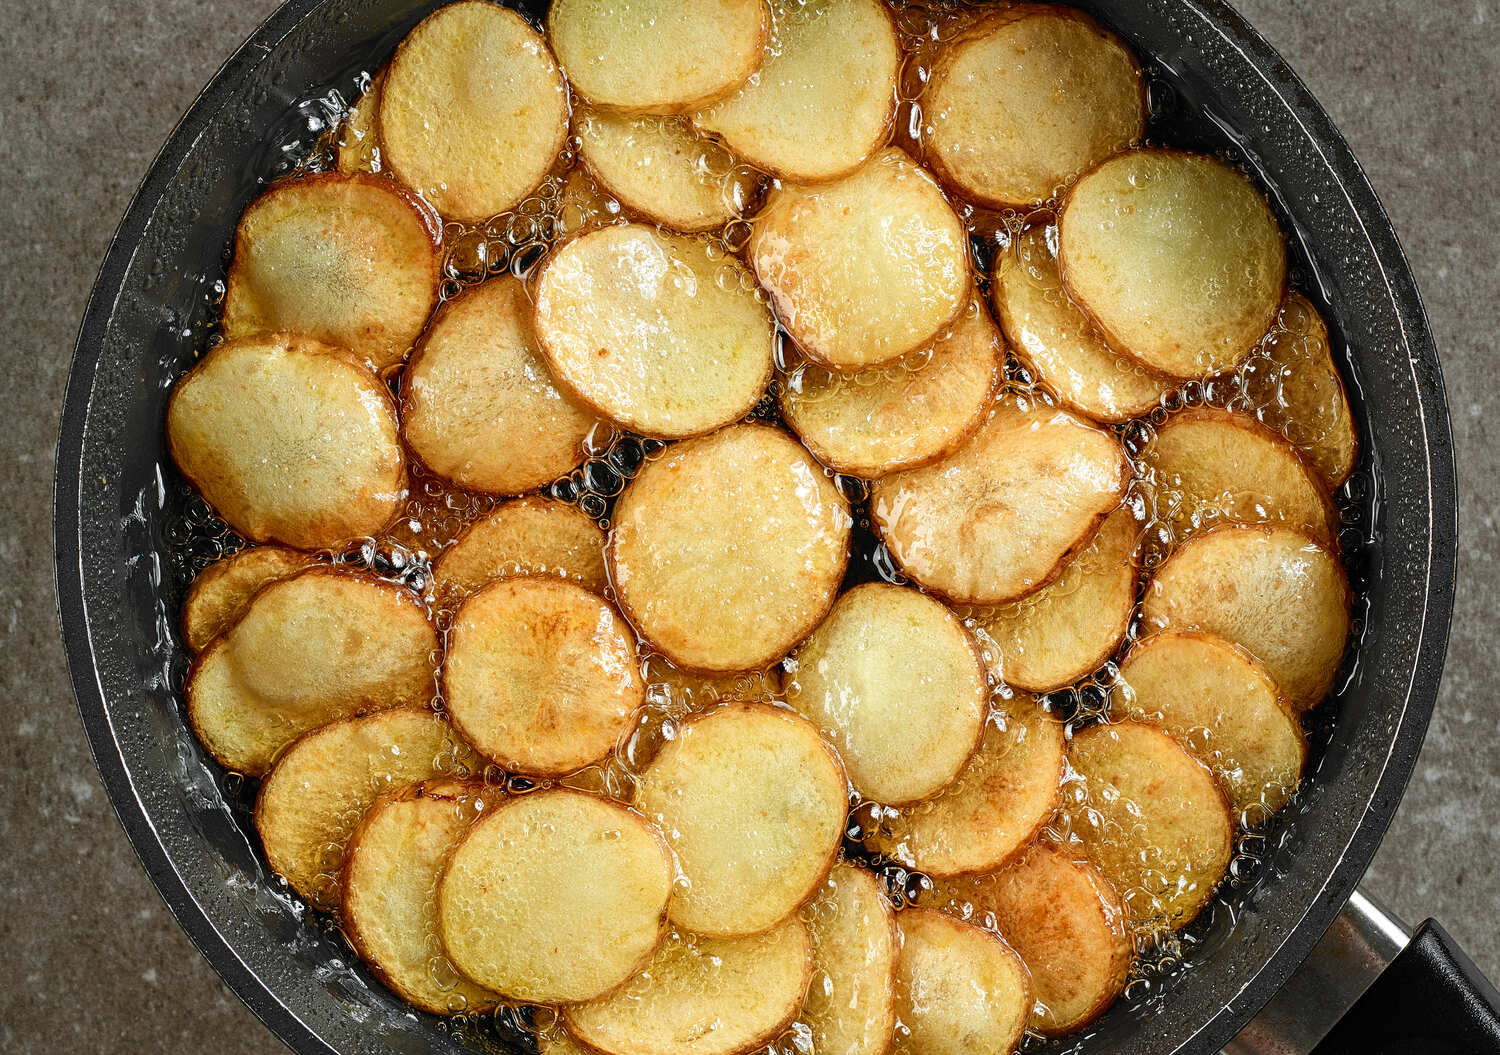 frying-potatoes-in-pan-with-oil-2021-08-26-16-31-49-utc-1-1.jpg